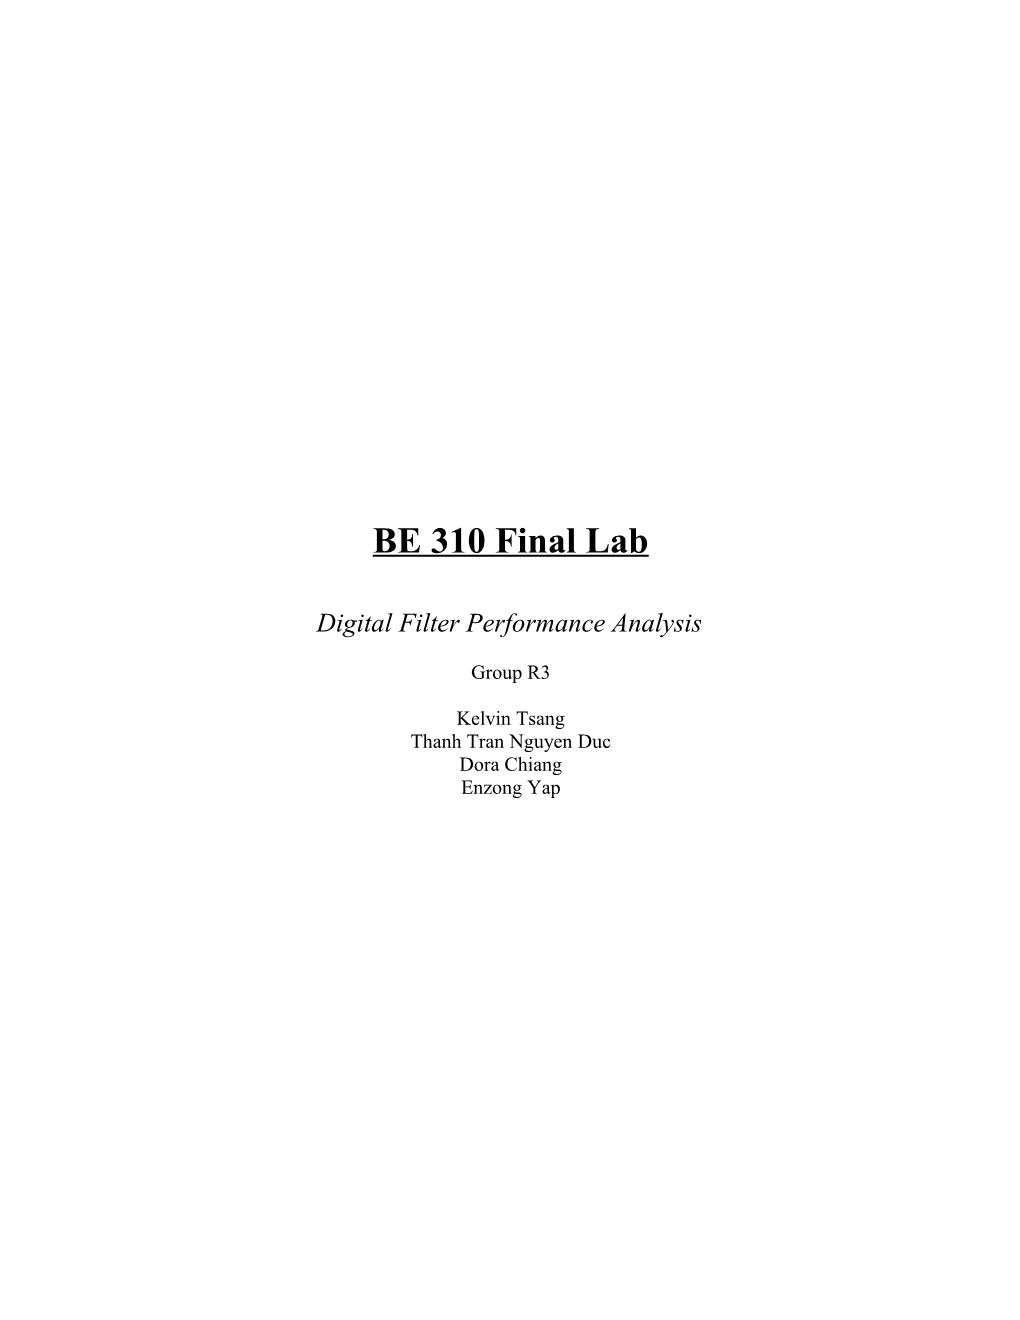 Digital Filter Performance Analysis